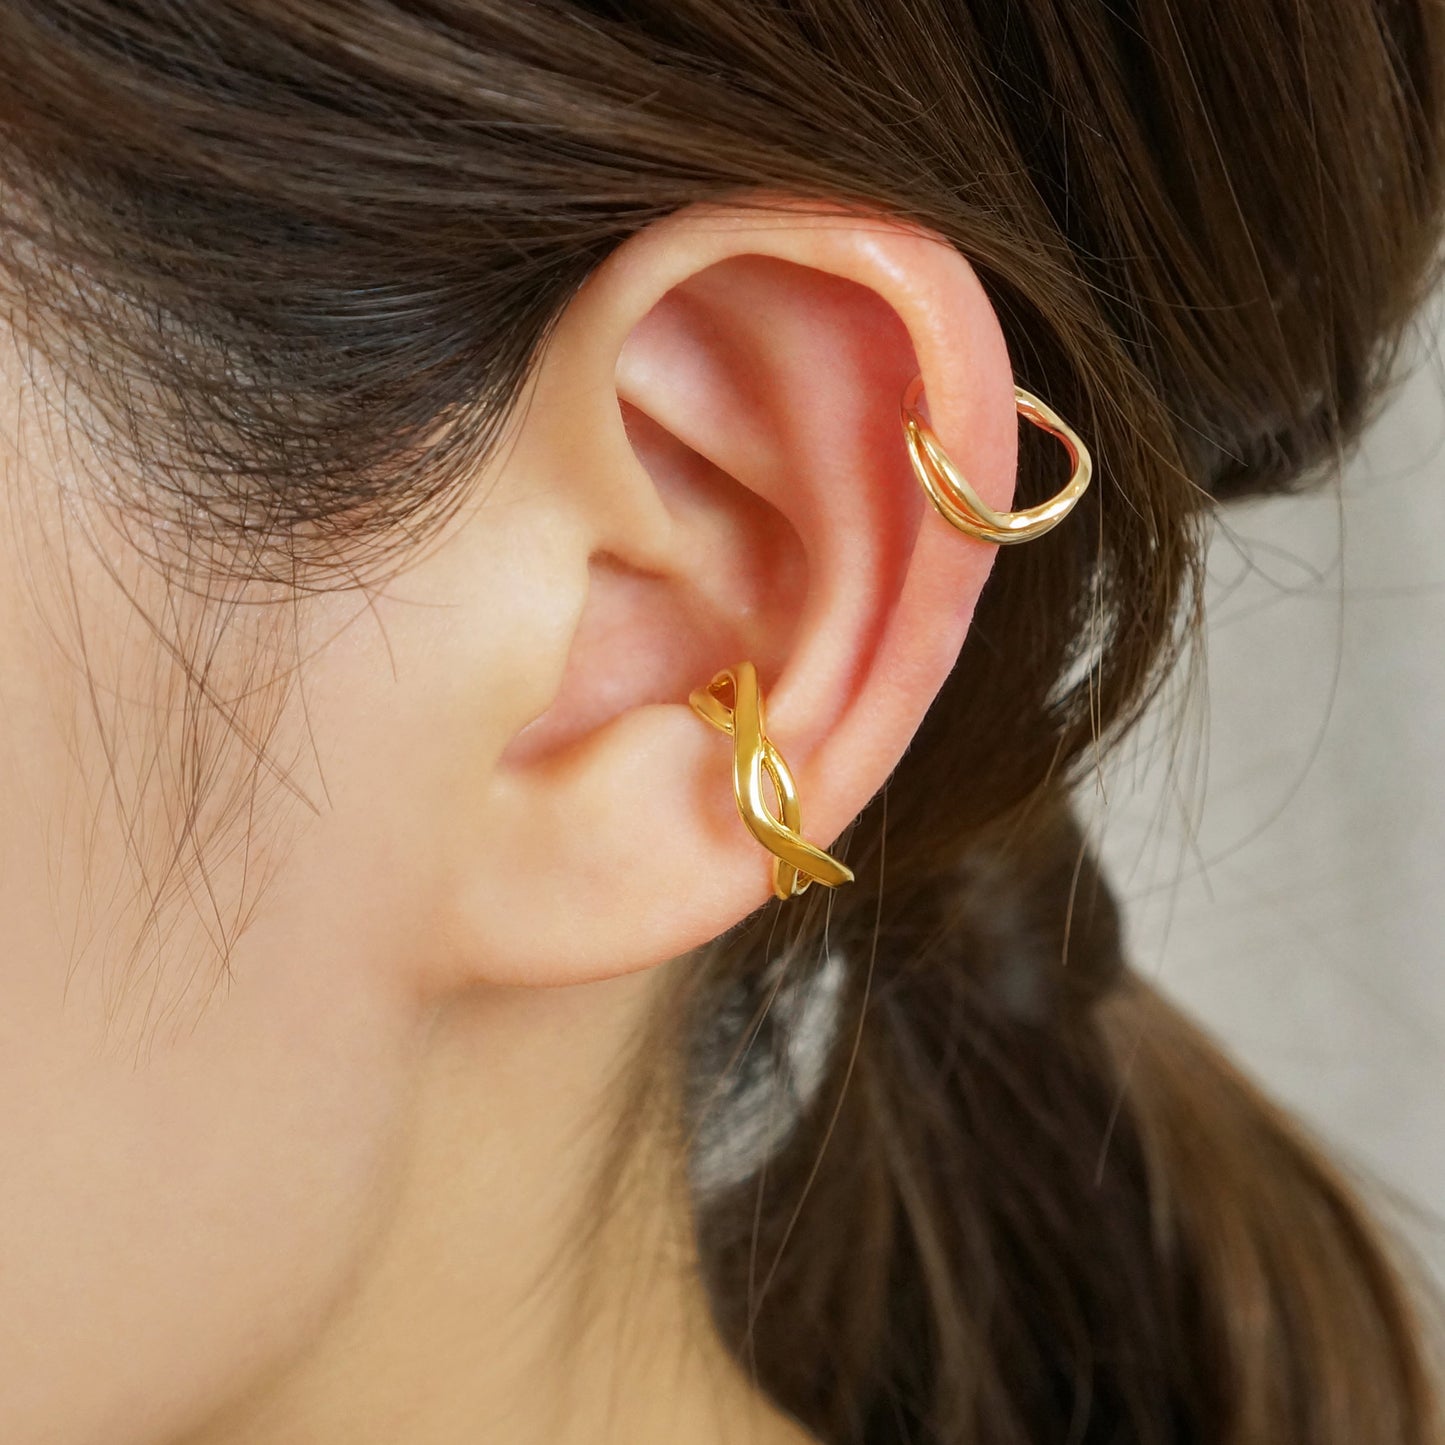 10K Gold / 925 Sterling Silver Wave Ear Cuff Set - Model Image